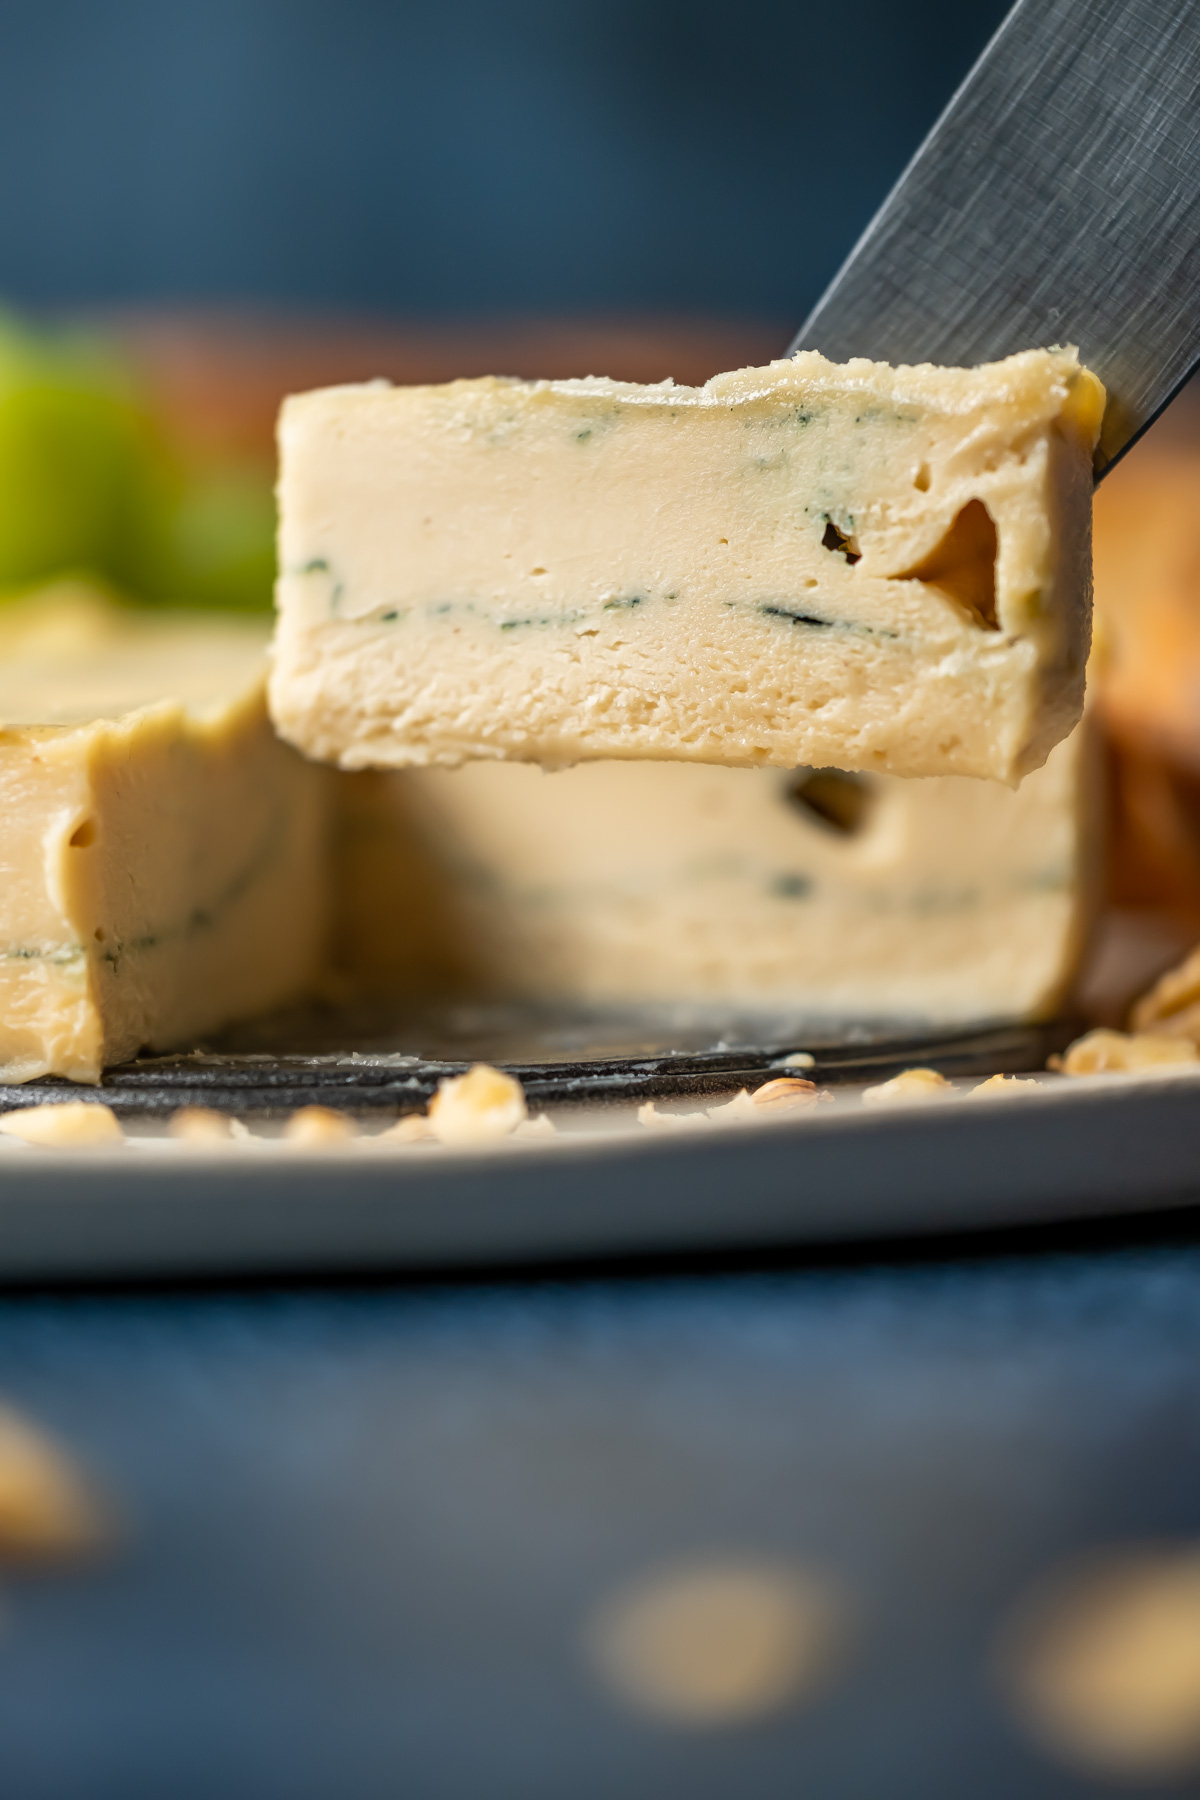 Slice of vegan blue cheese.